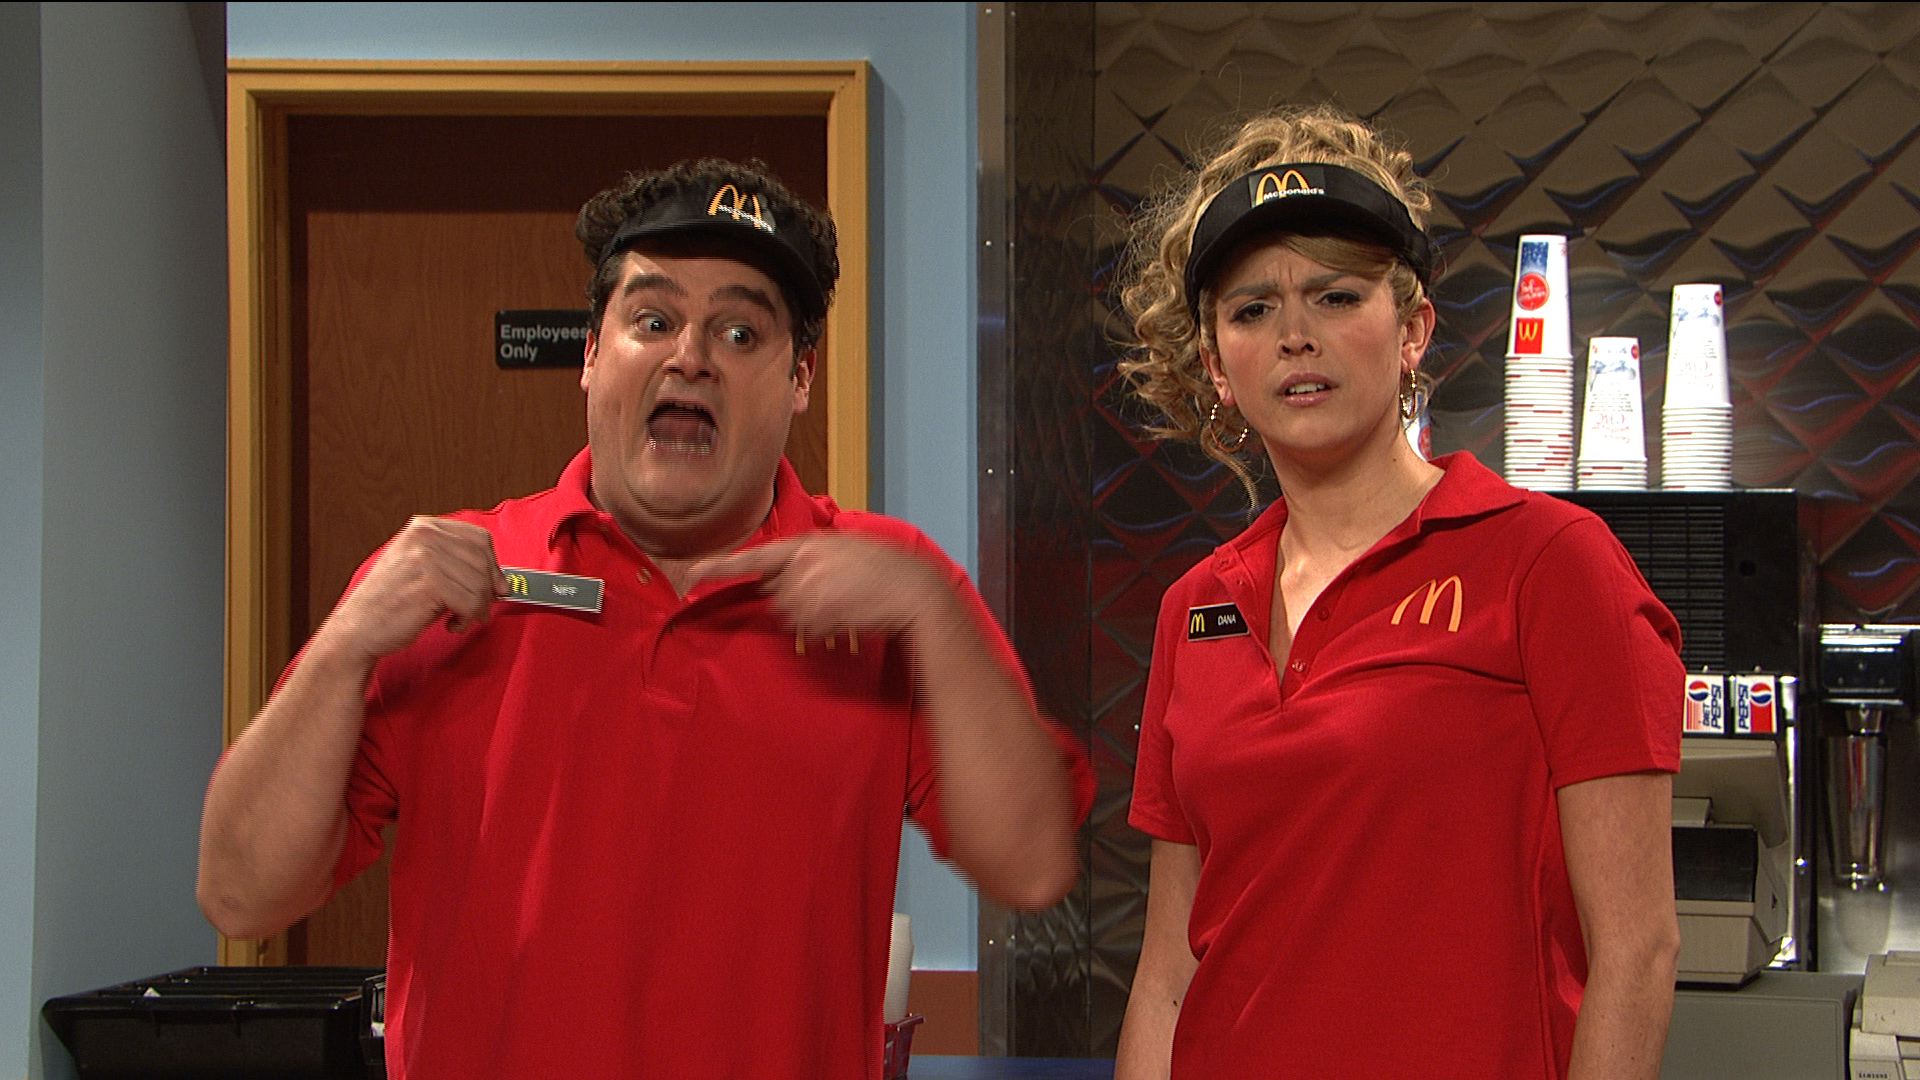 Watch McDonald's Firing From Saturday Night Live - NBC.com